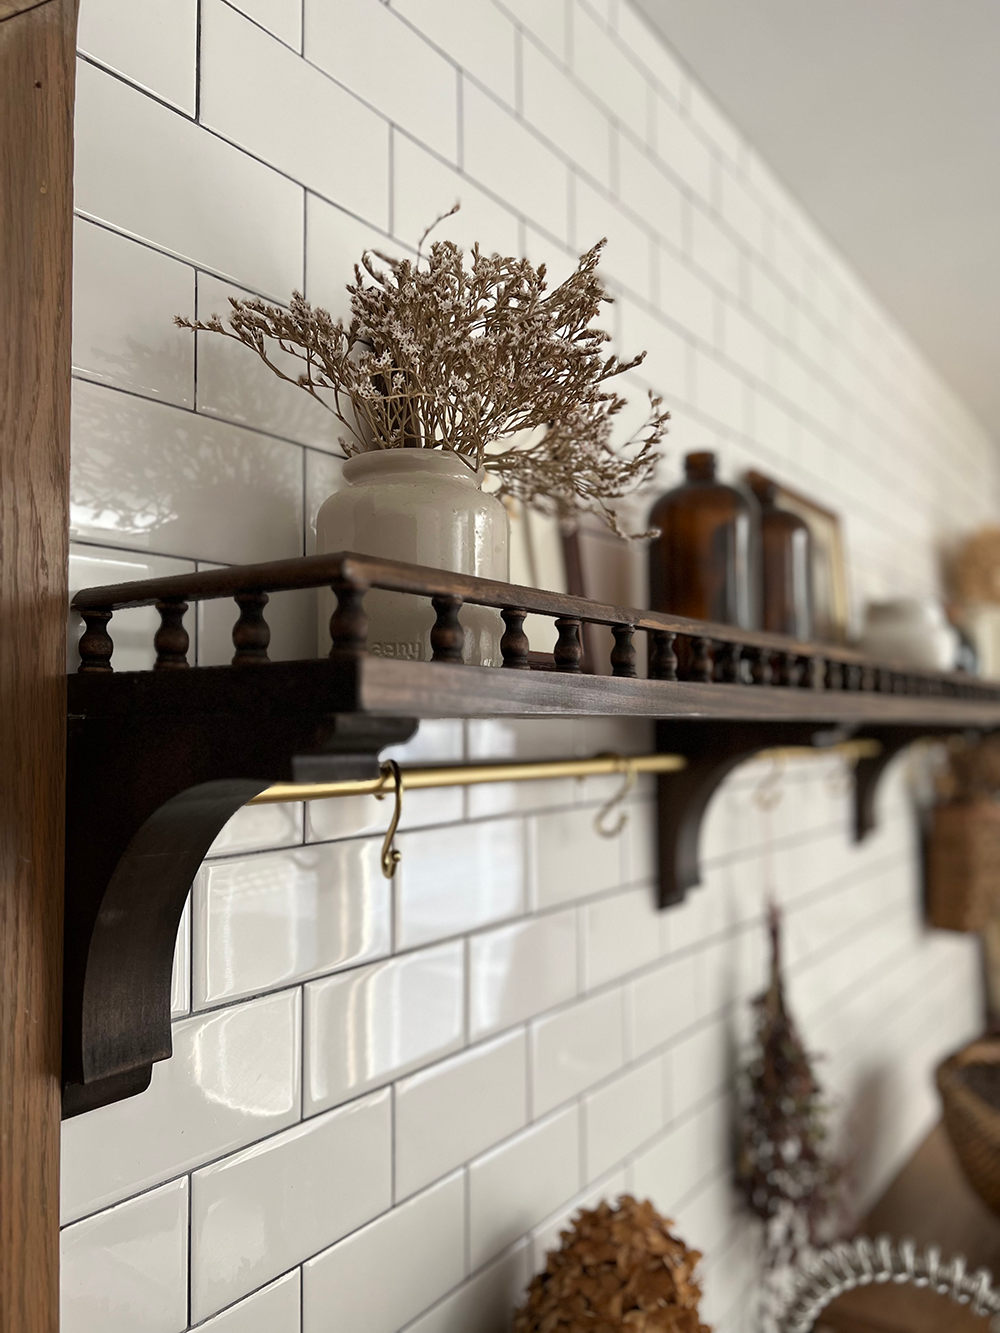 DIY Brass Decorative Gallery Rail for Shelves